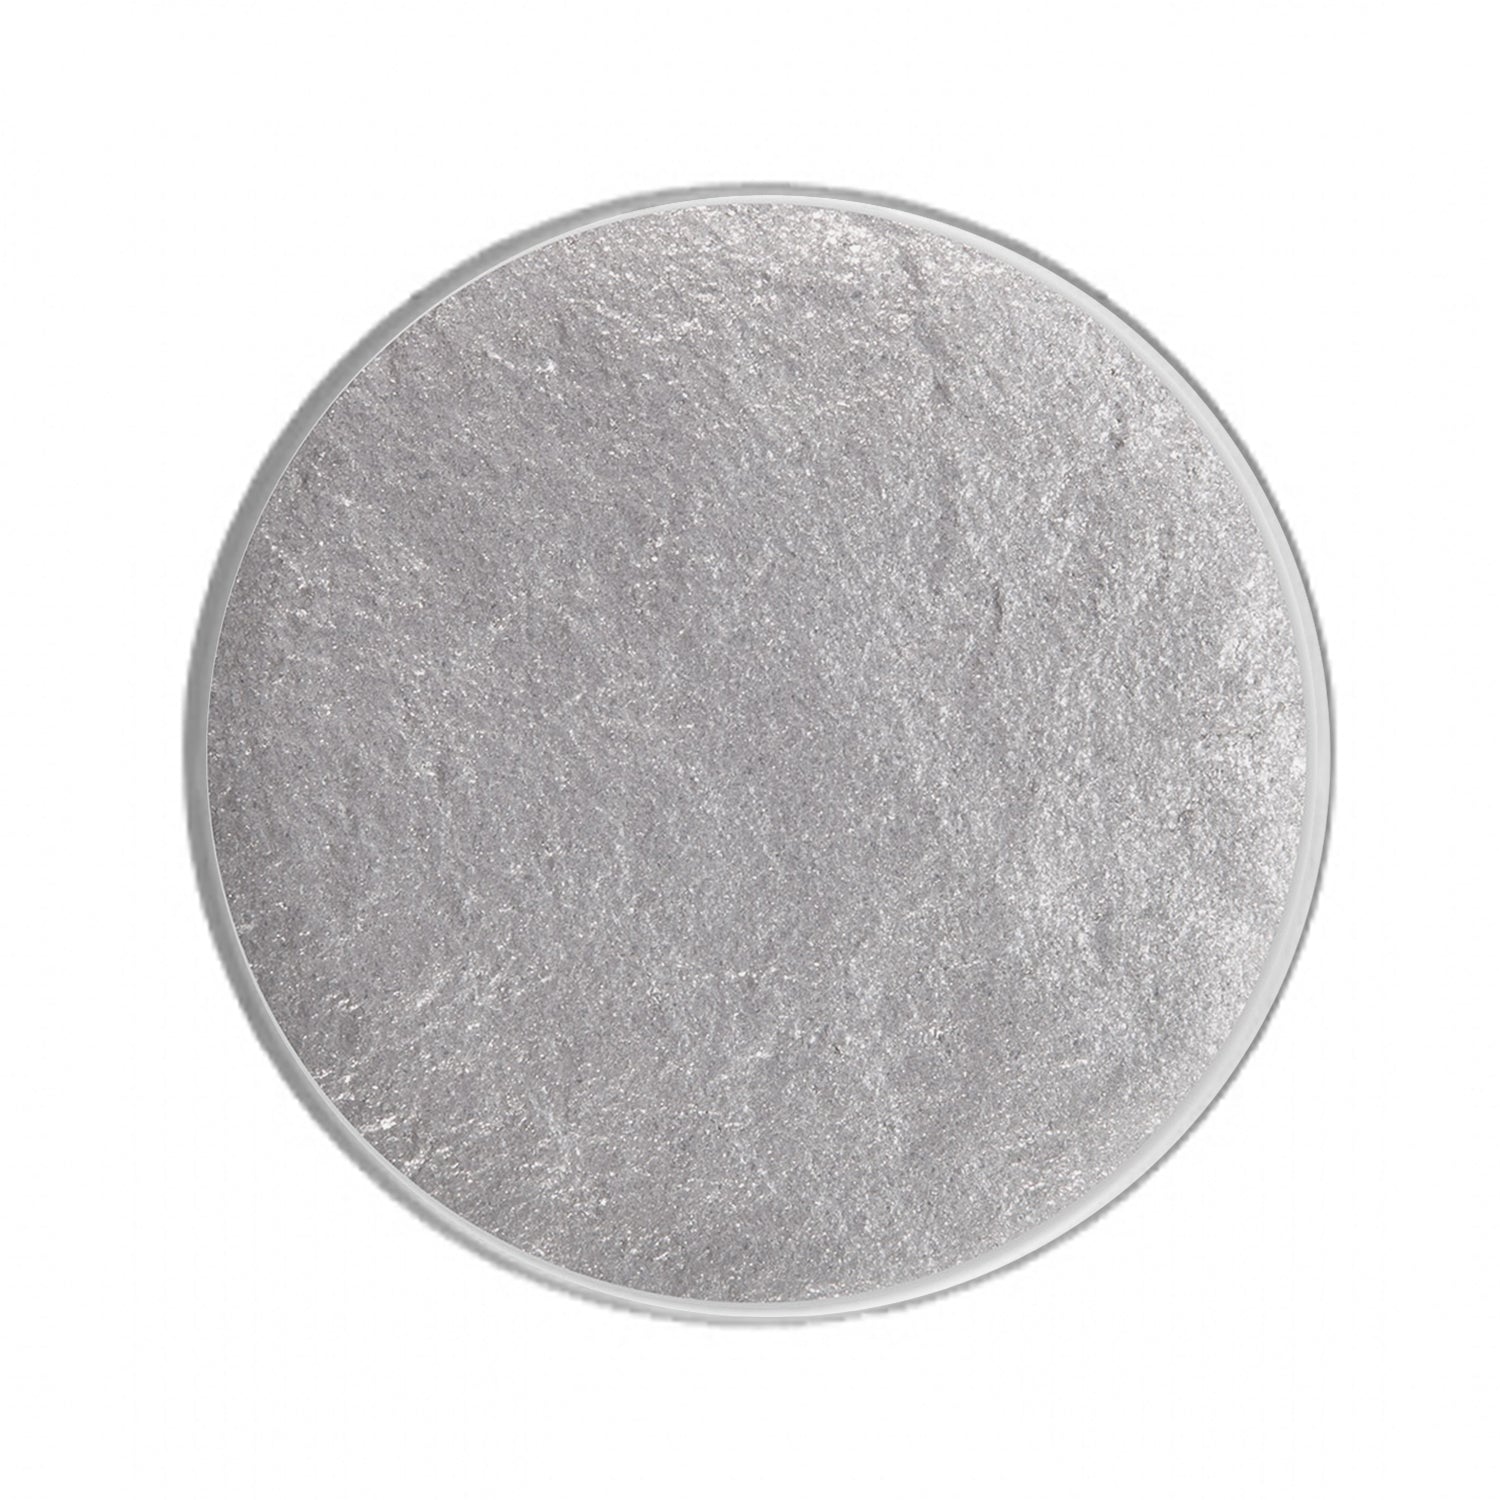 Snazaroo Face Paint Colors Metallic Silver